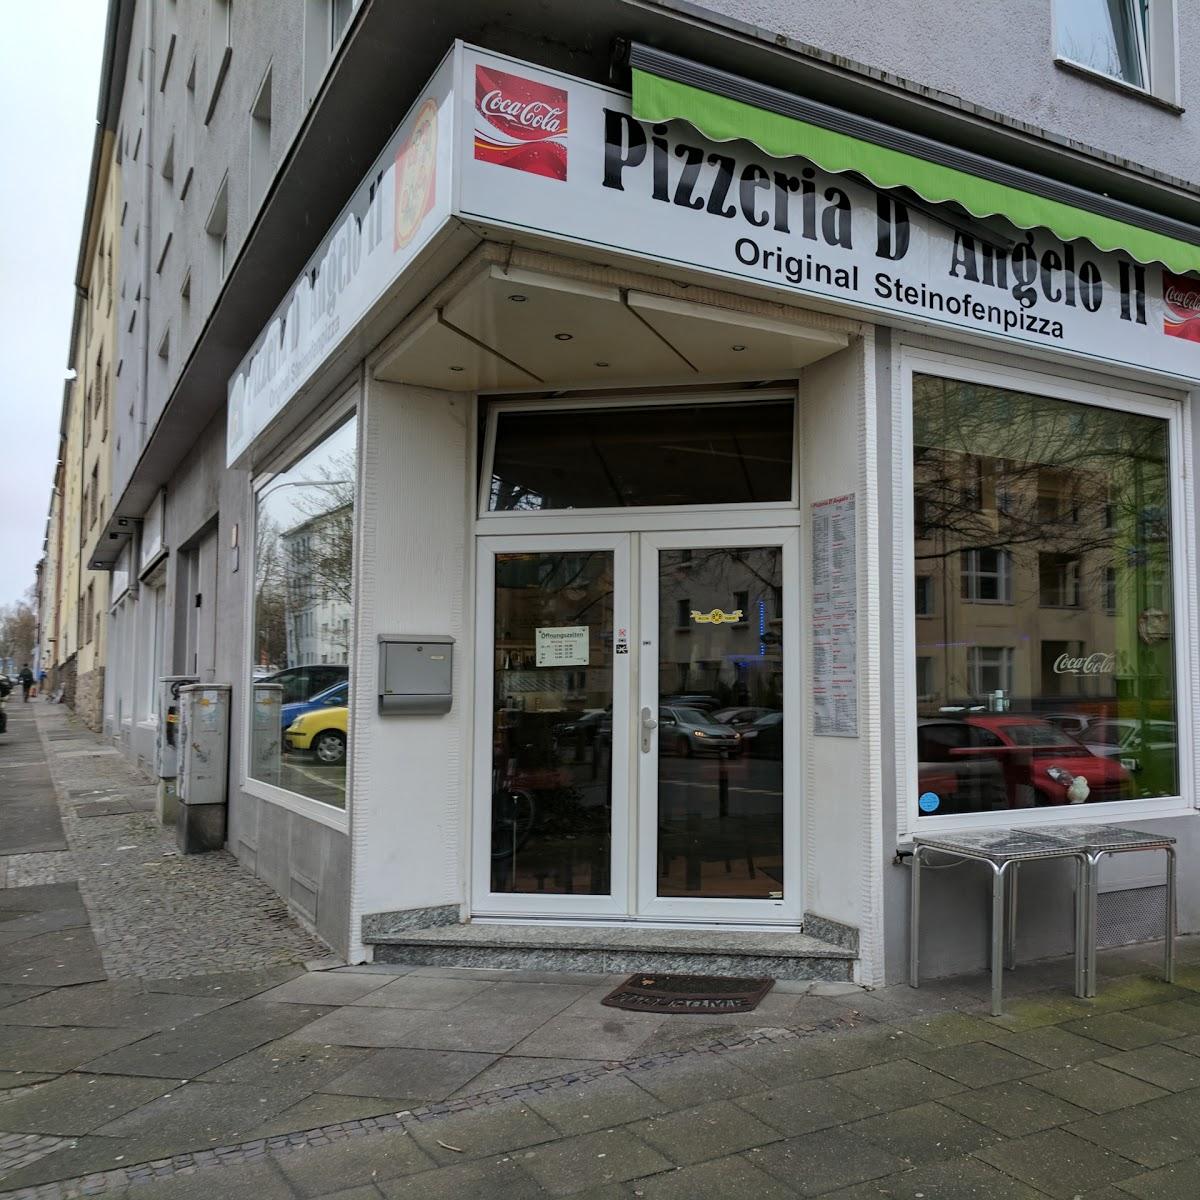 Restaurant "Pizzeria D